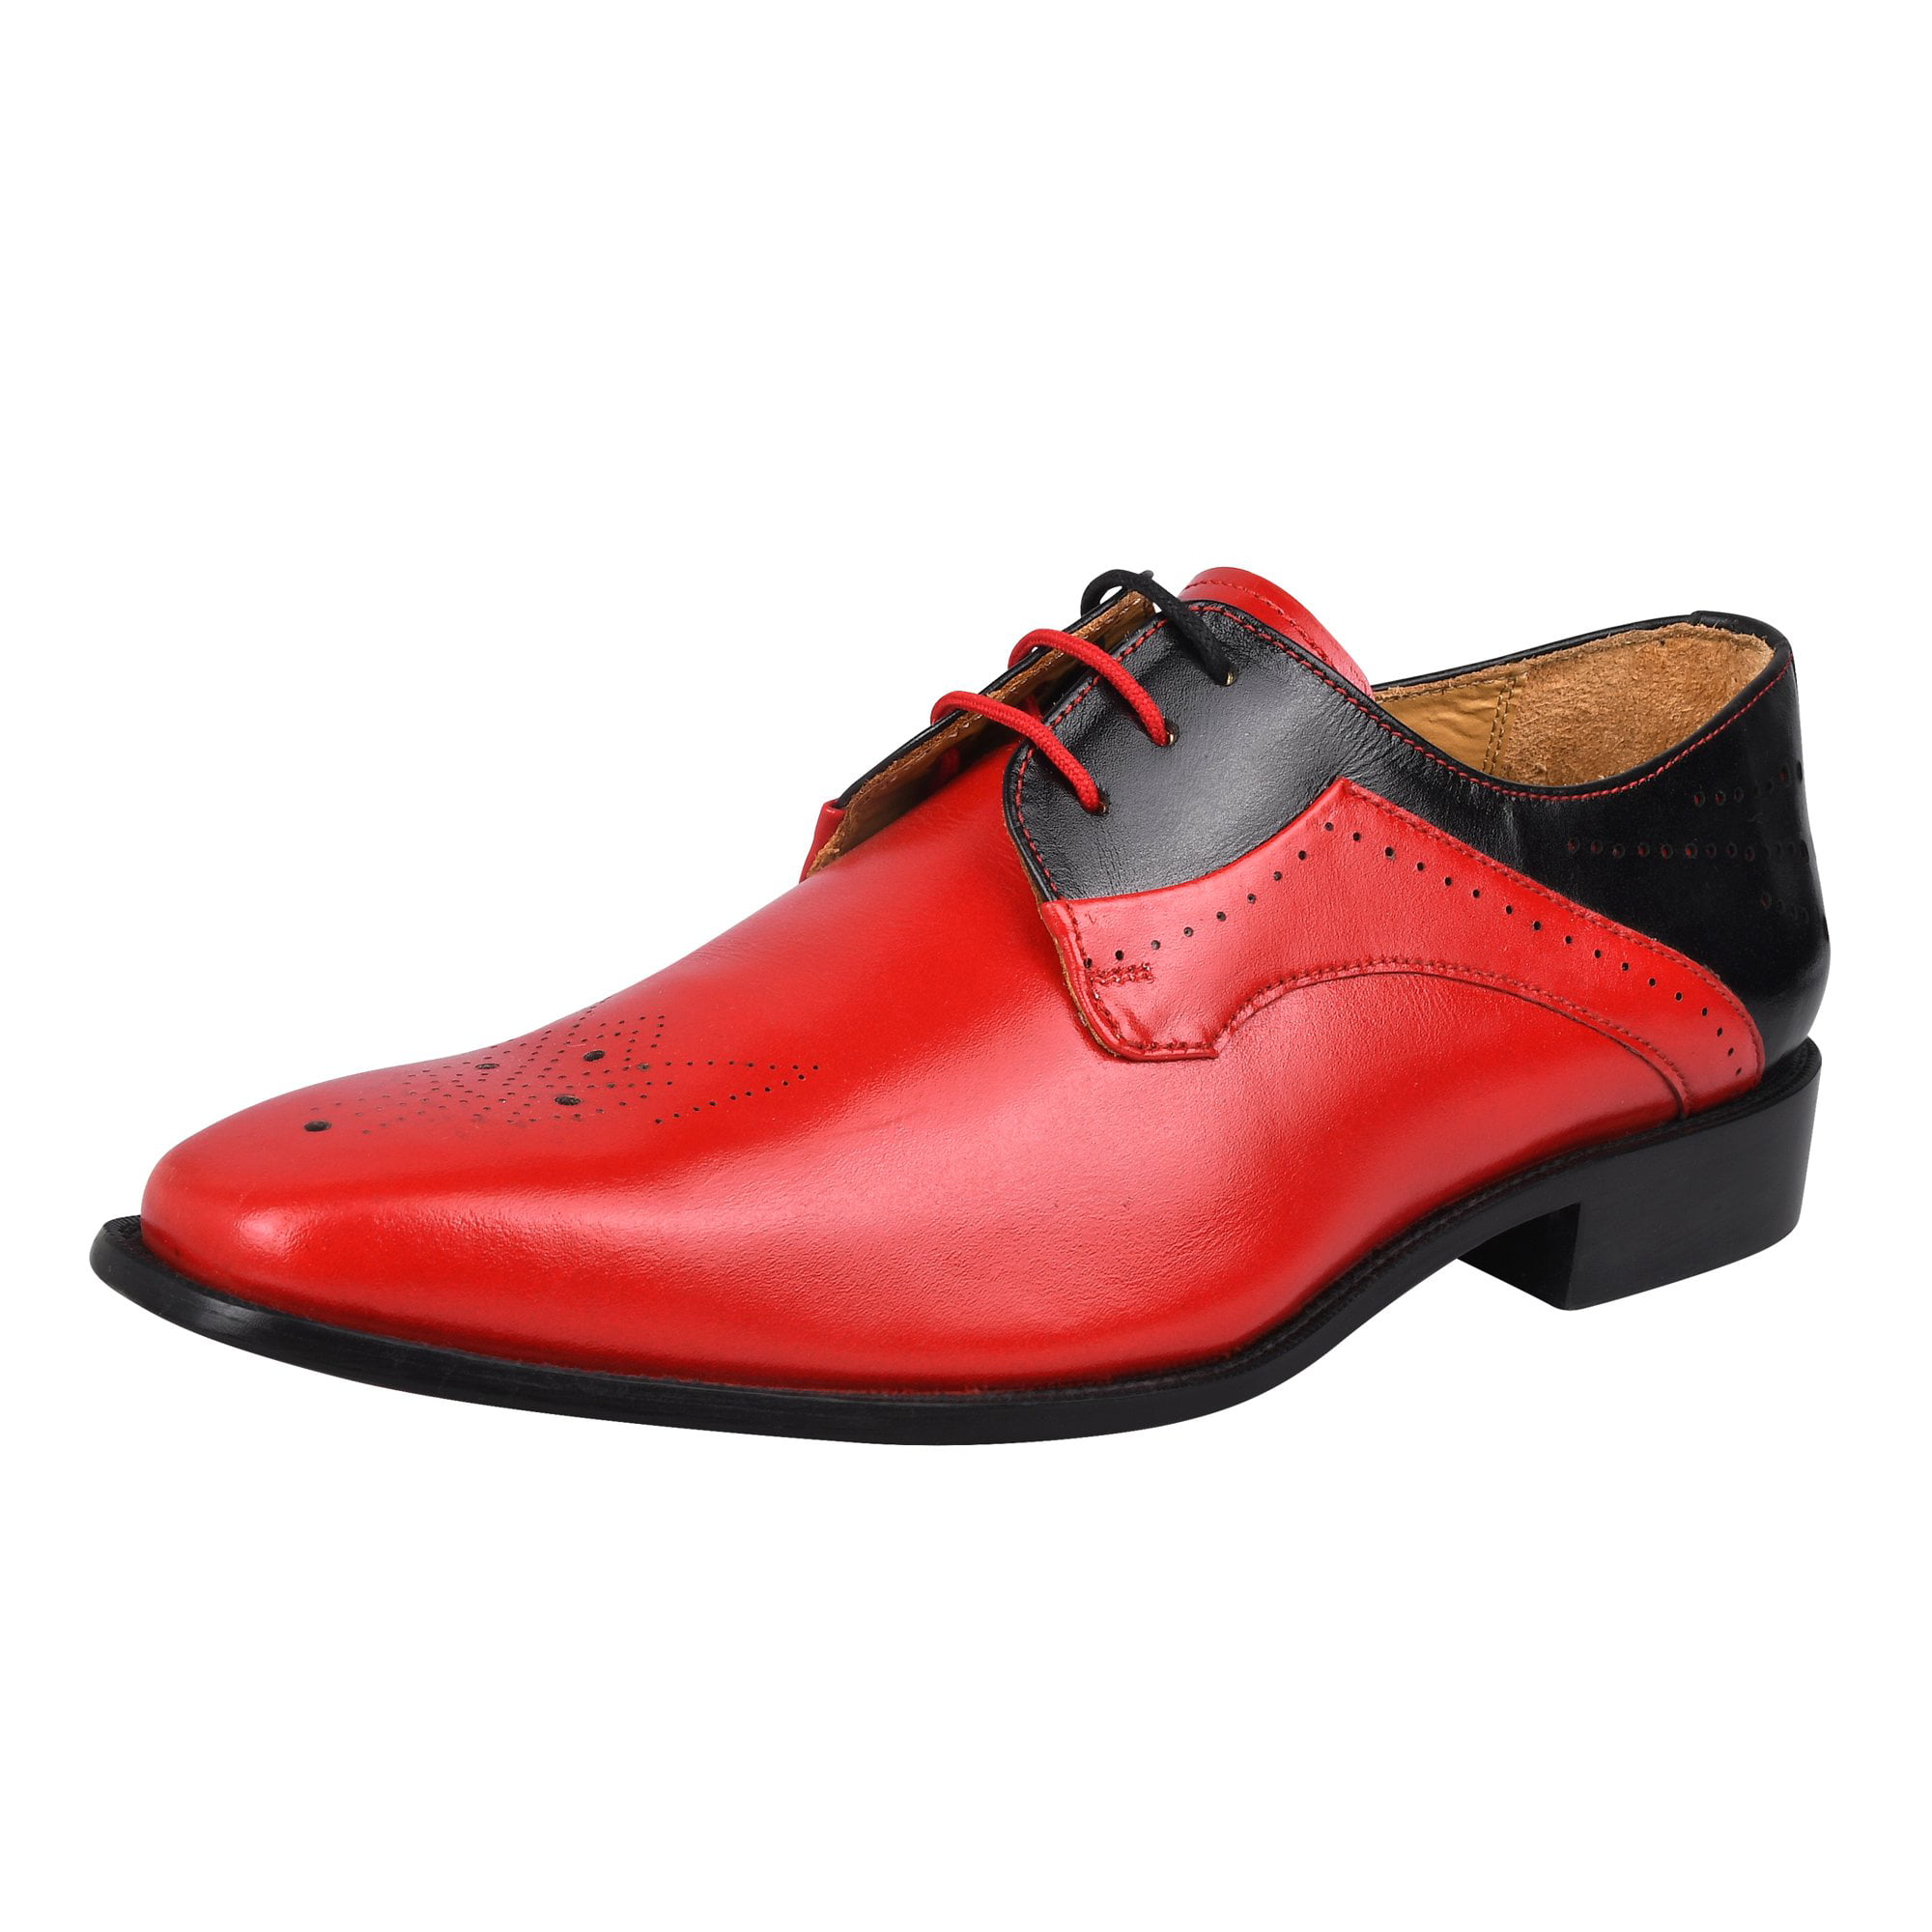 LIBERTYZENO Mens Leather Oxford Dress Shoes, Black/Red - Walmart.com